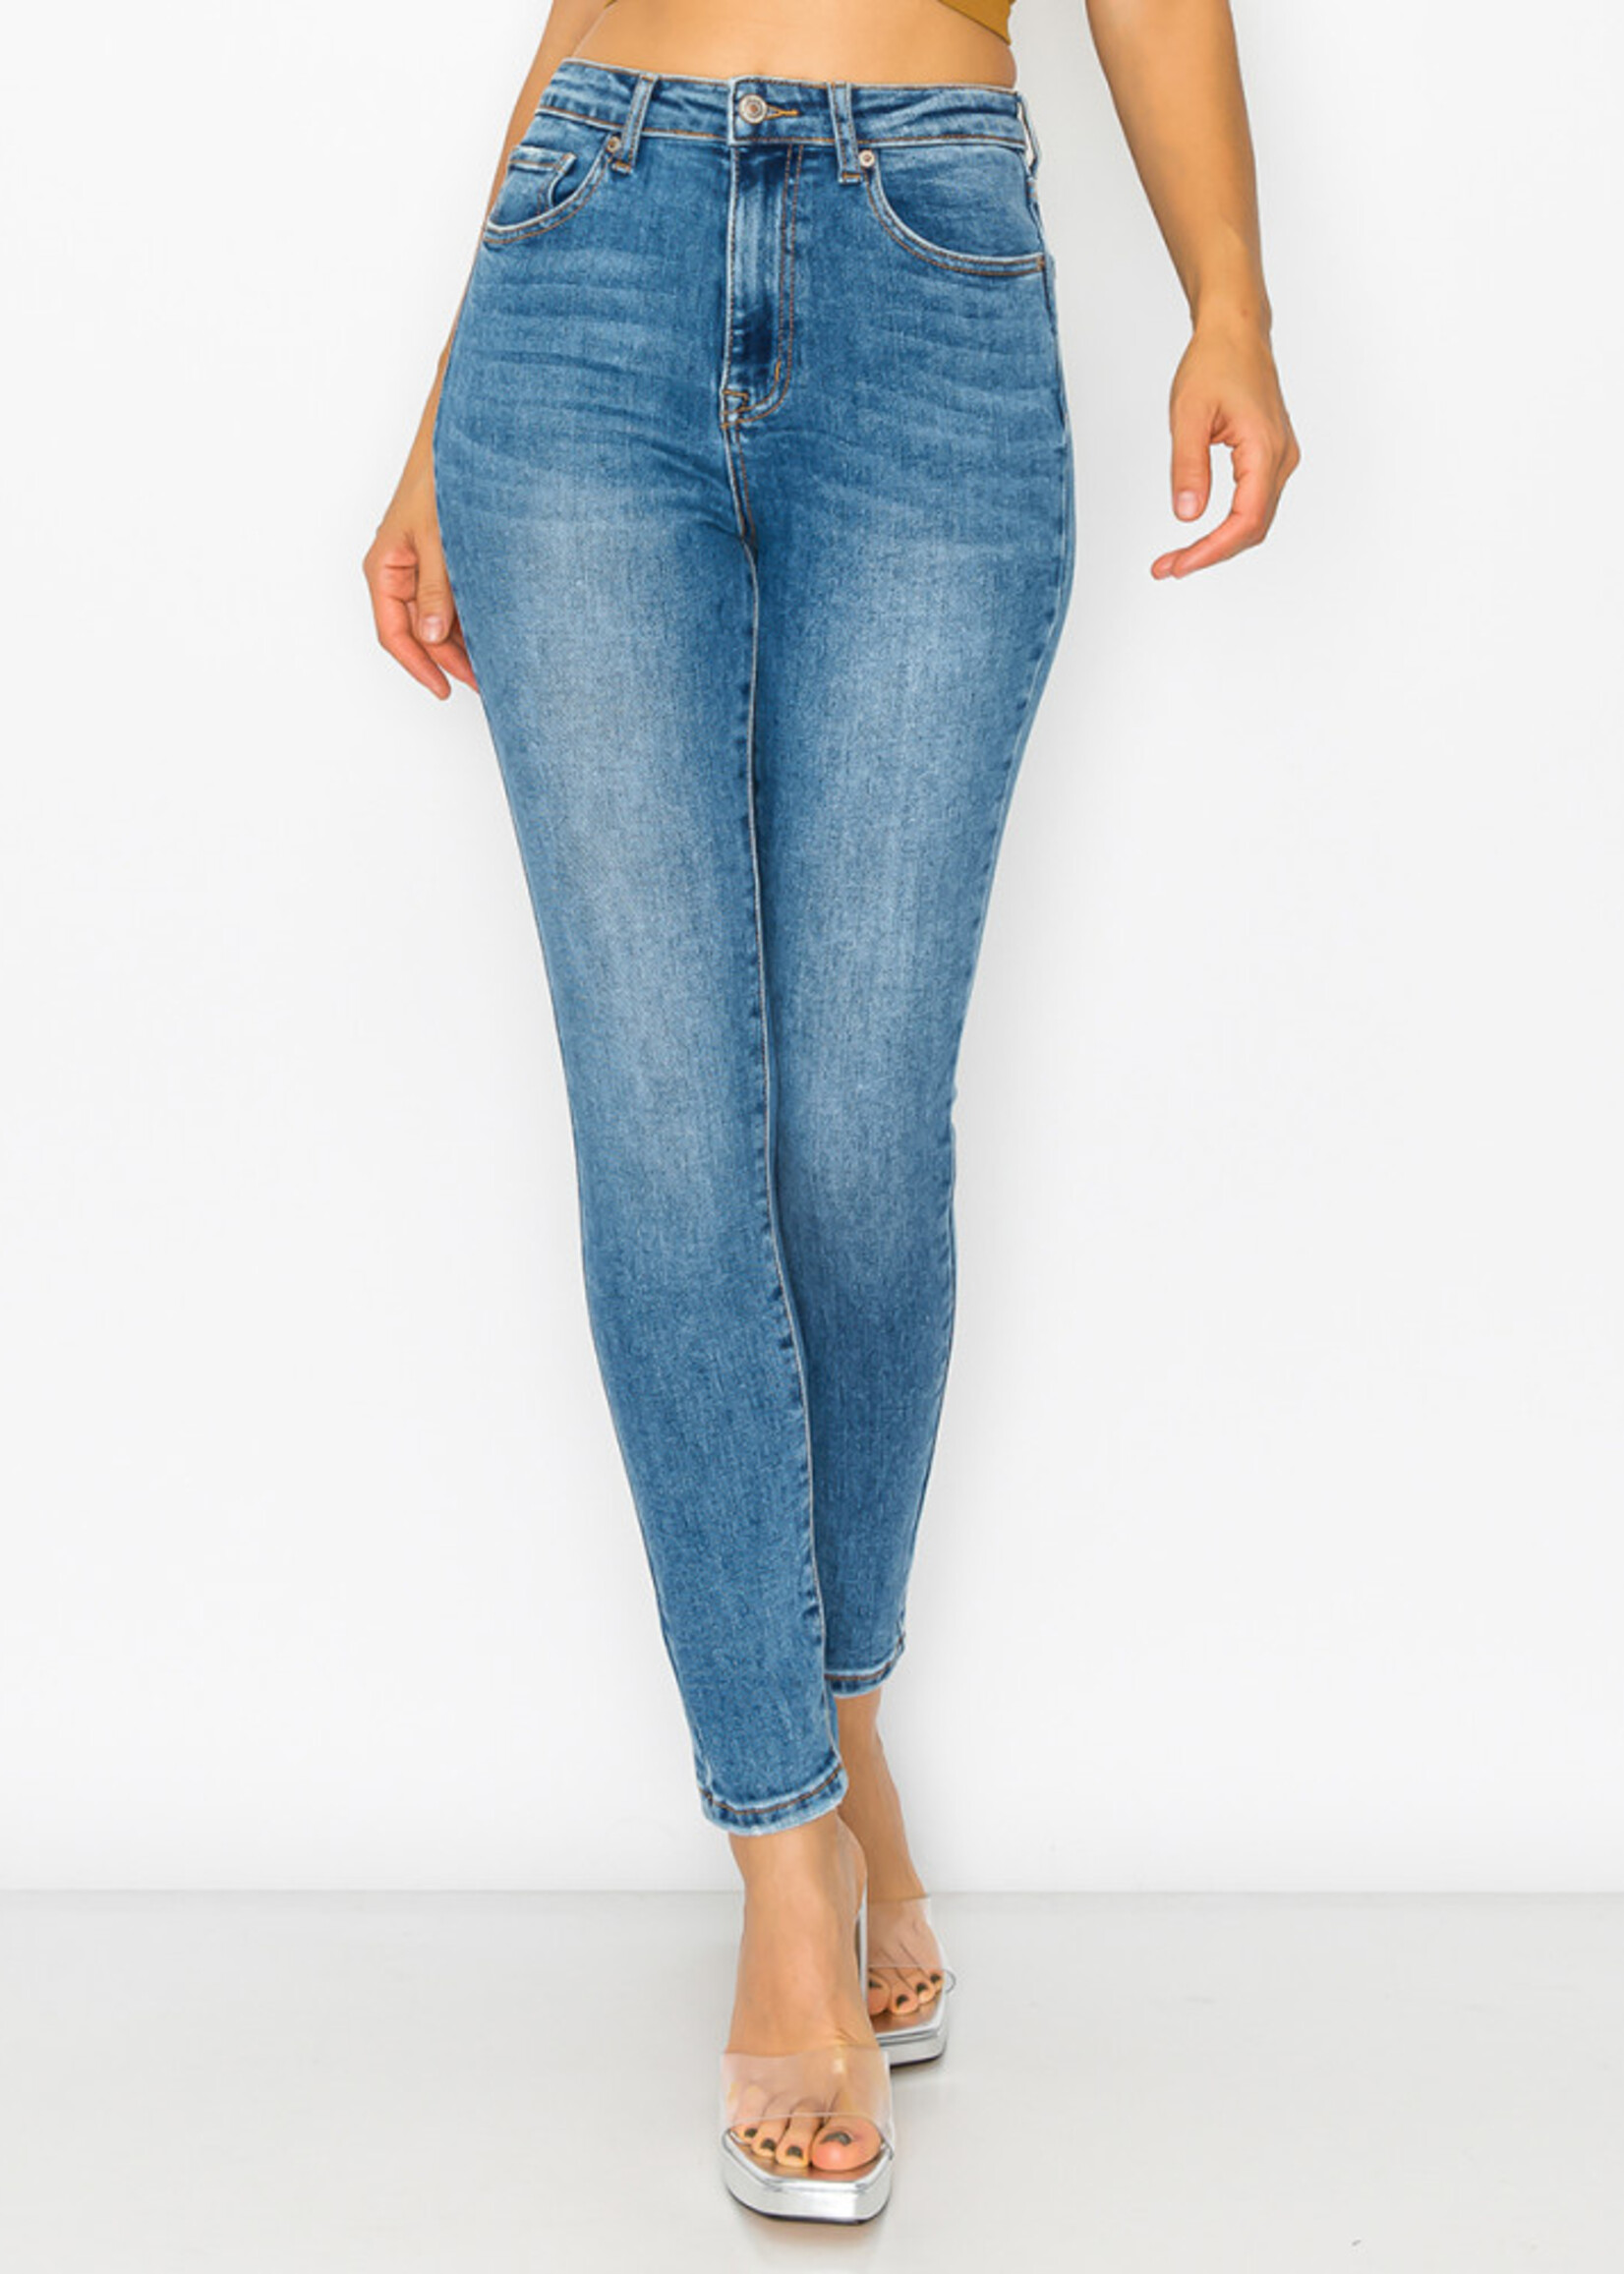 https://cdn.shoplightspeed.com/shops/634146/files/61464576/1652x2313x1/wax-jeans-wax-jeans-authentic-high-waisted-basic-s.jpg